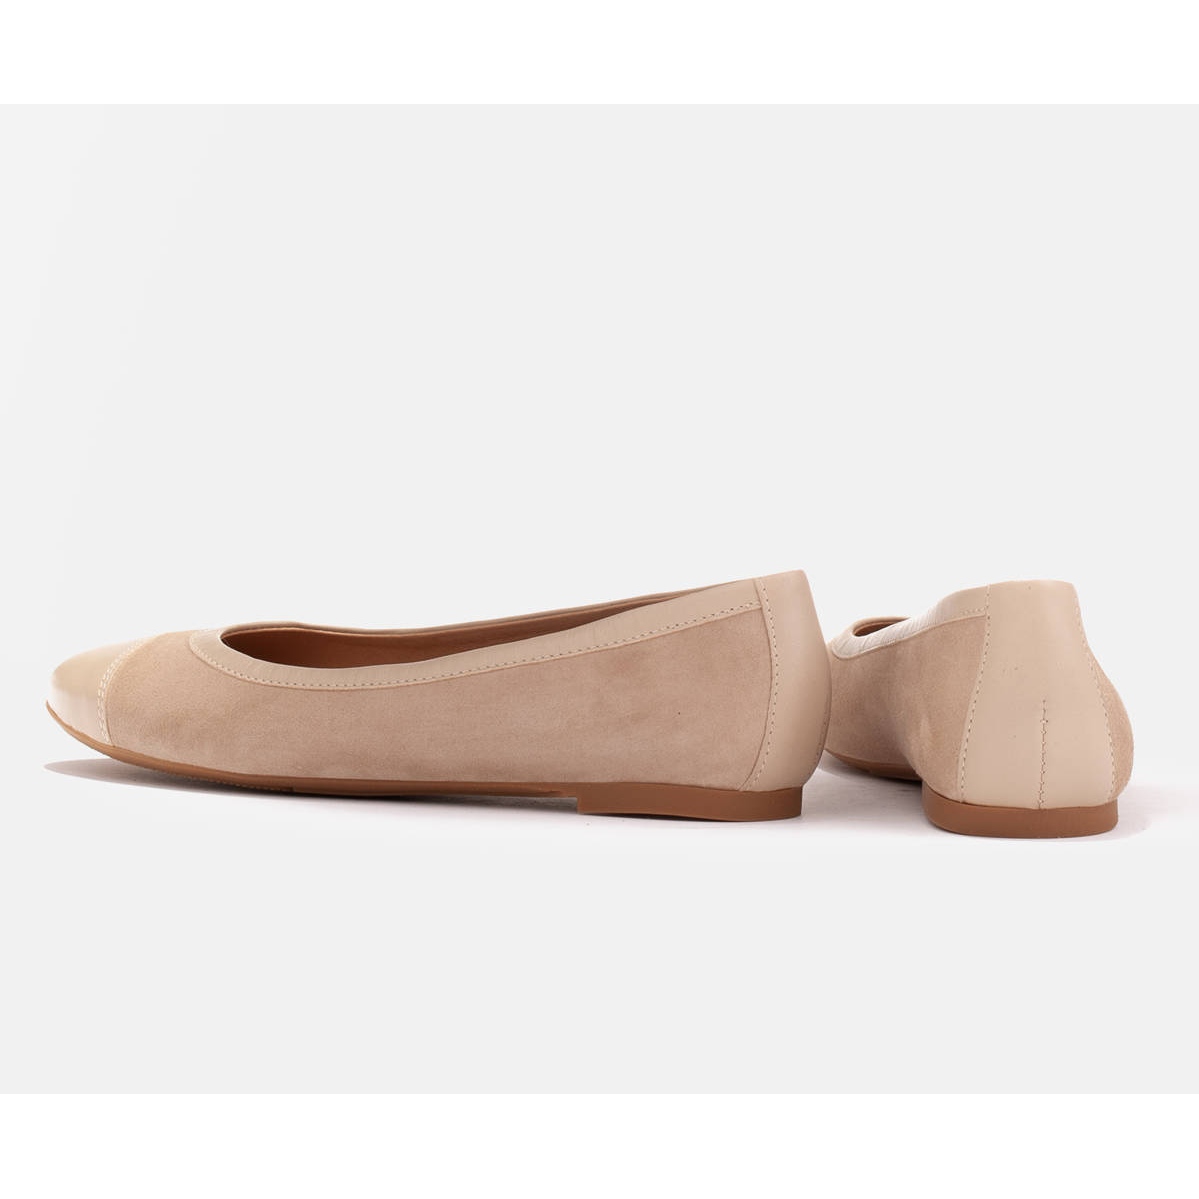 Shoes Komfortable ballerinaer trim - KeeShoes